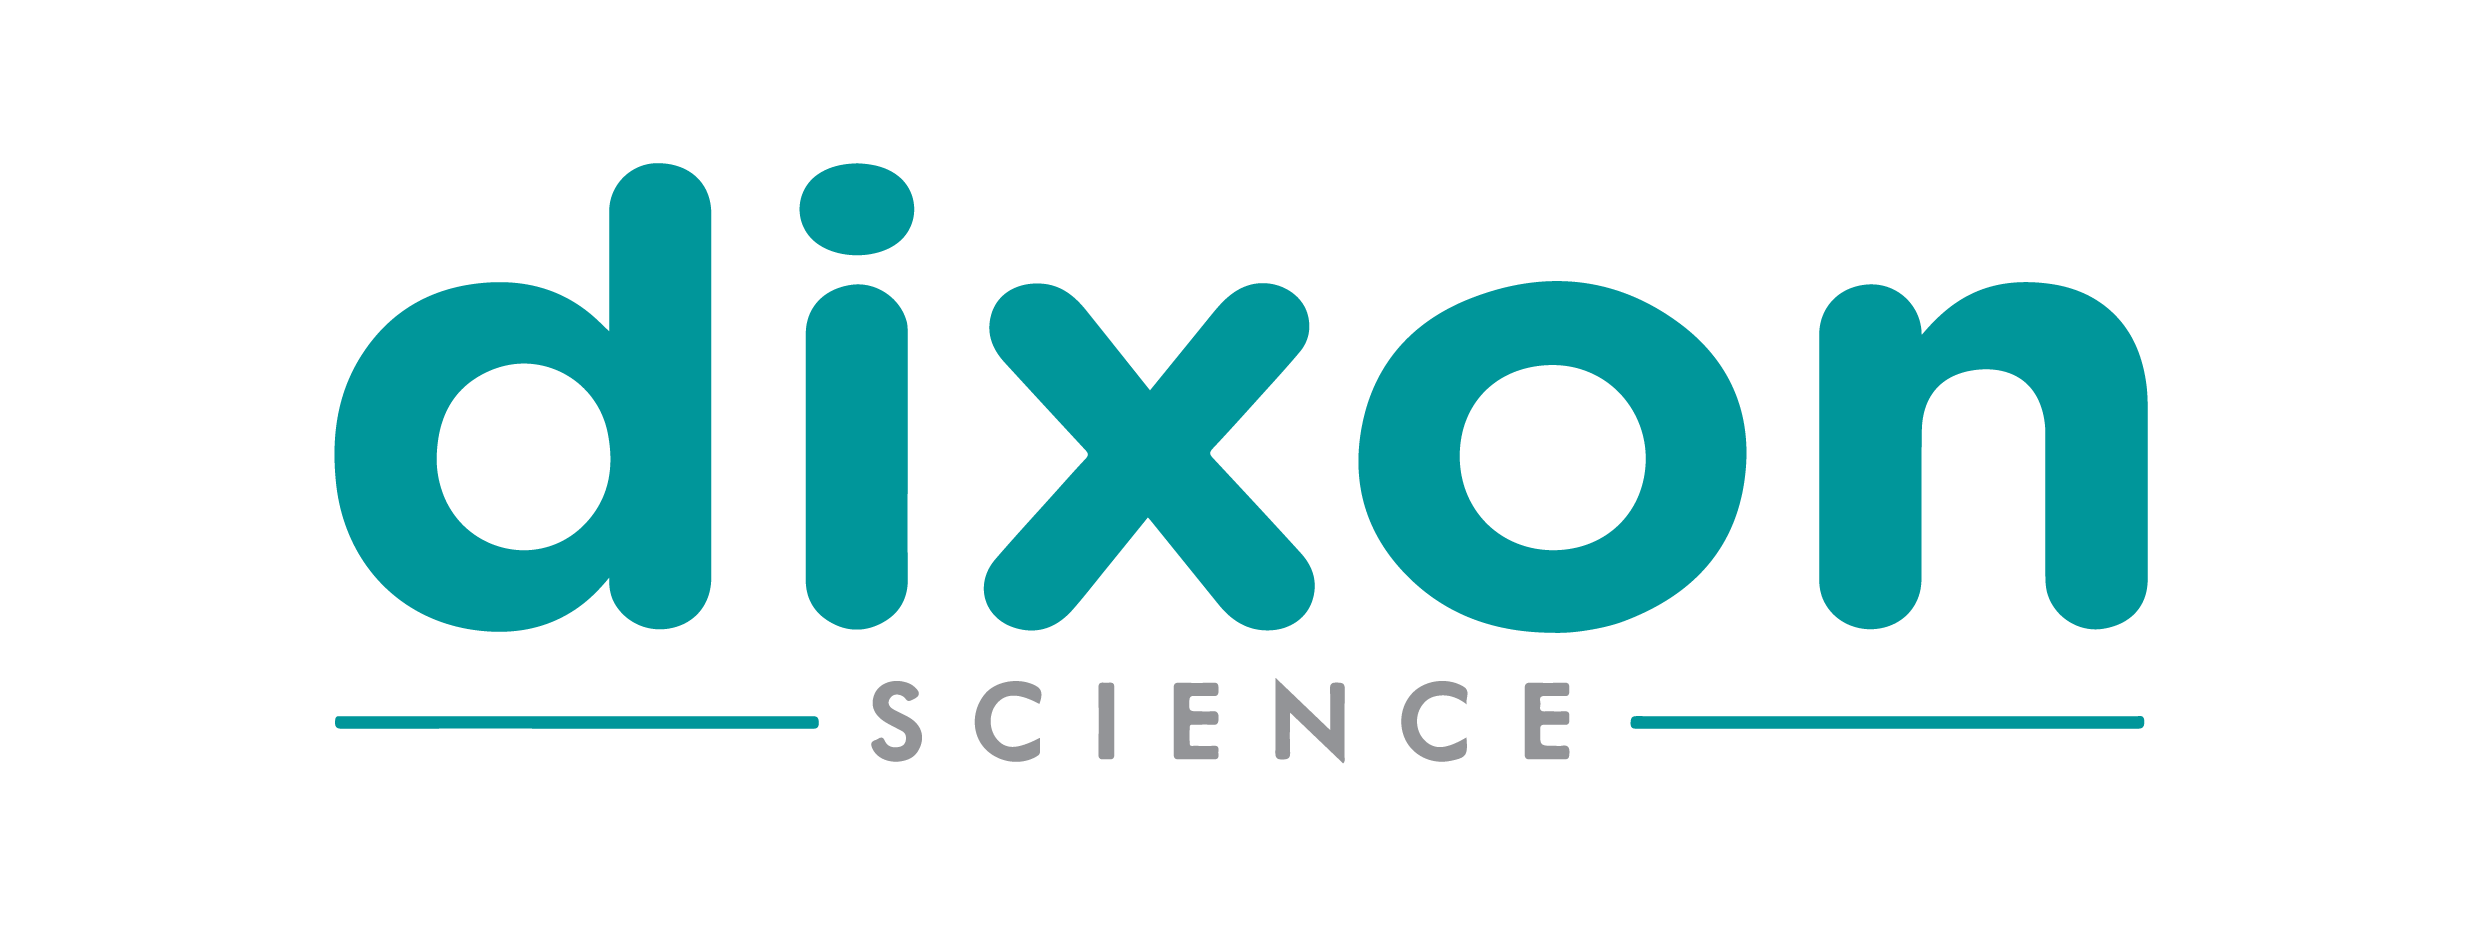 Dixon science logo